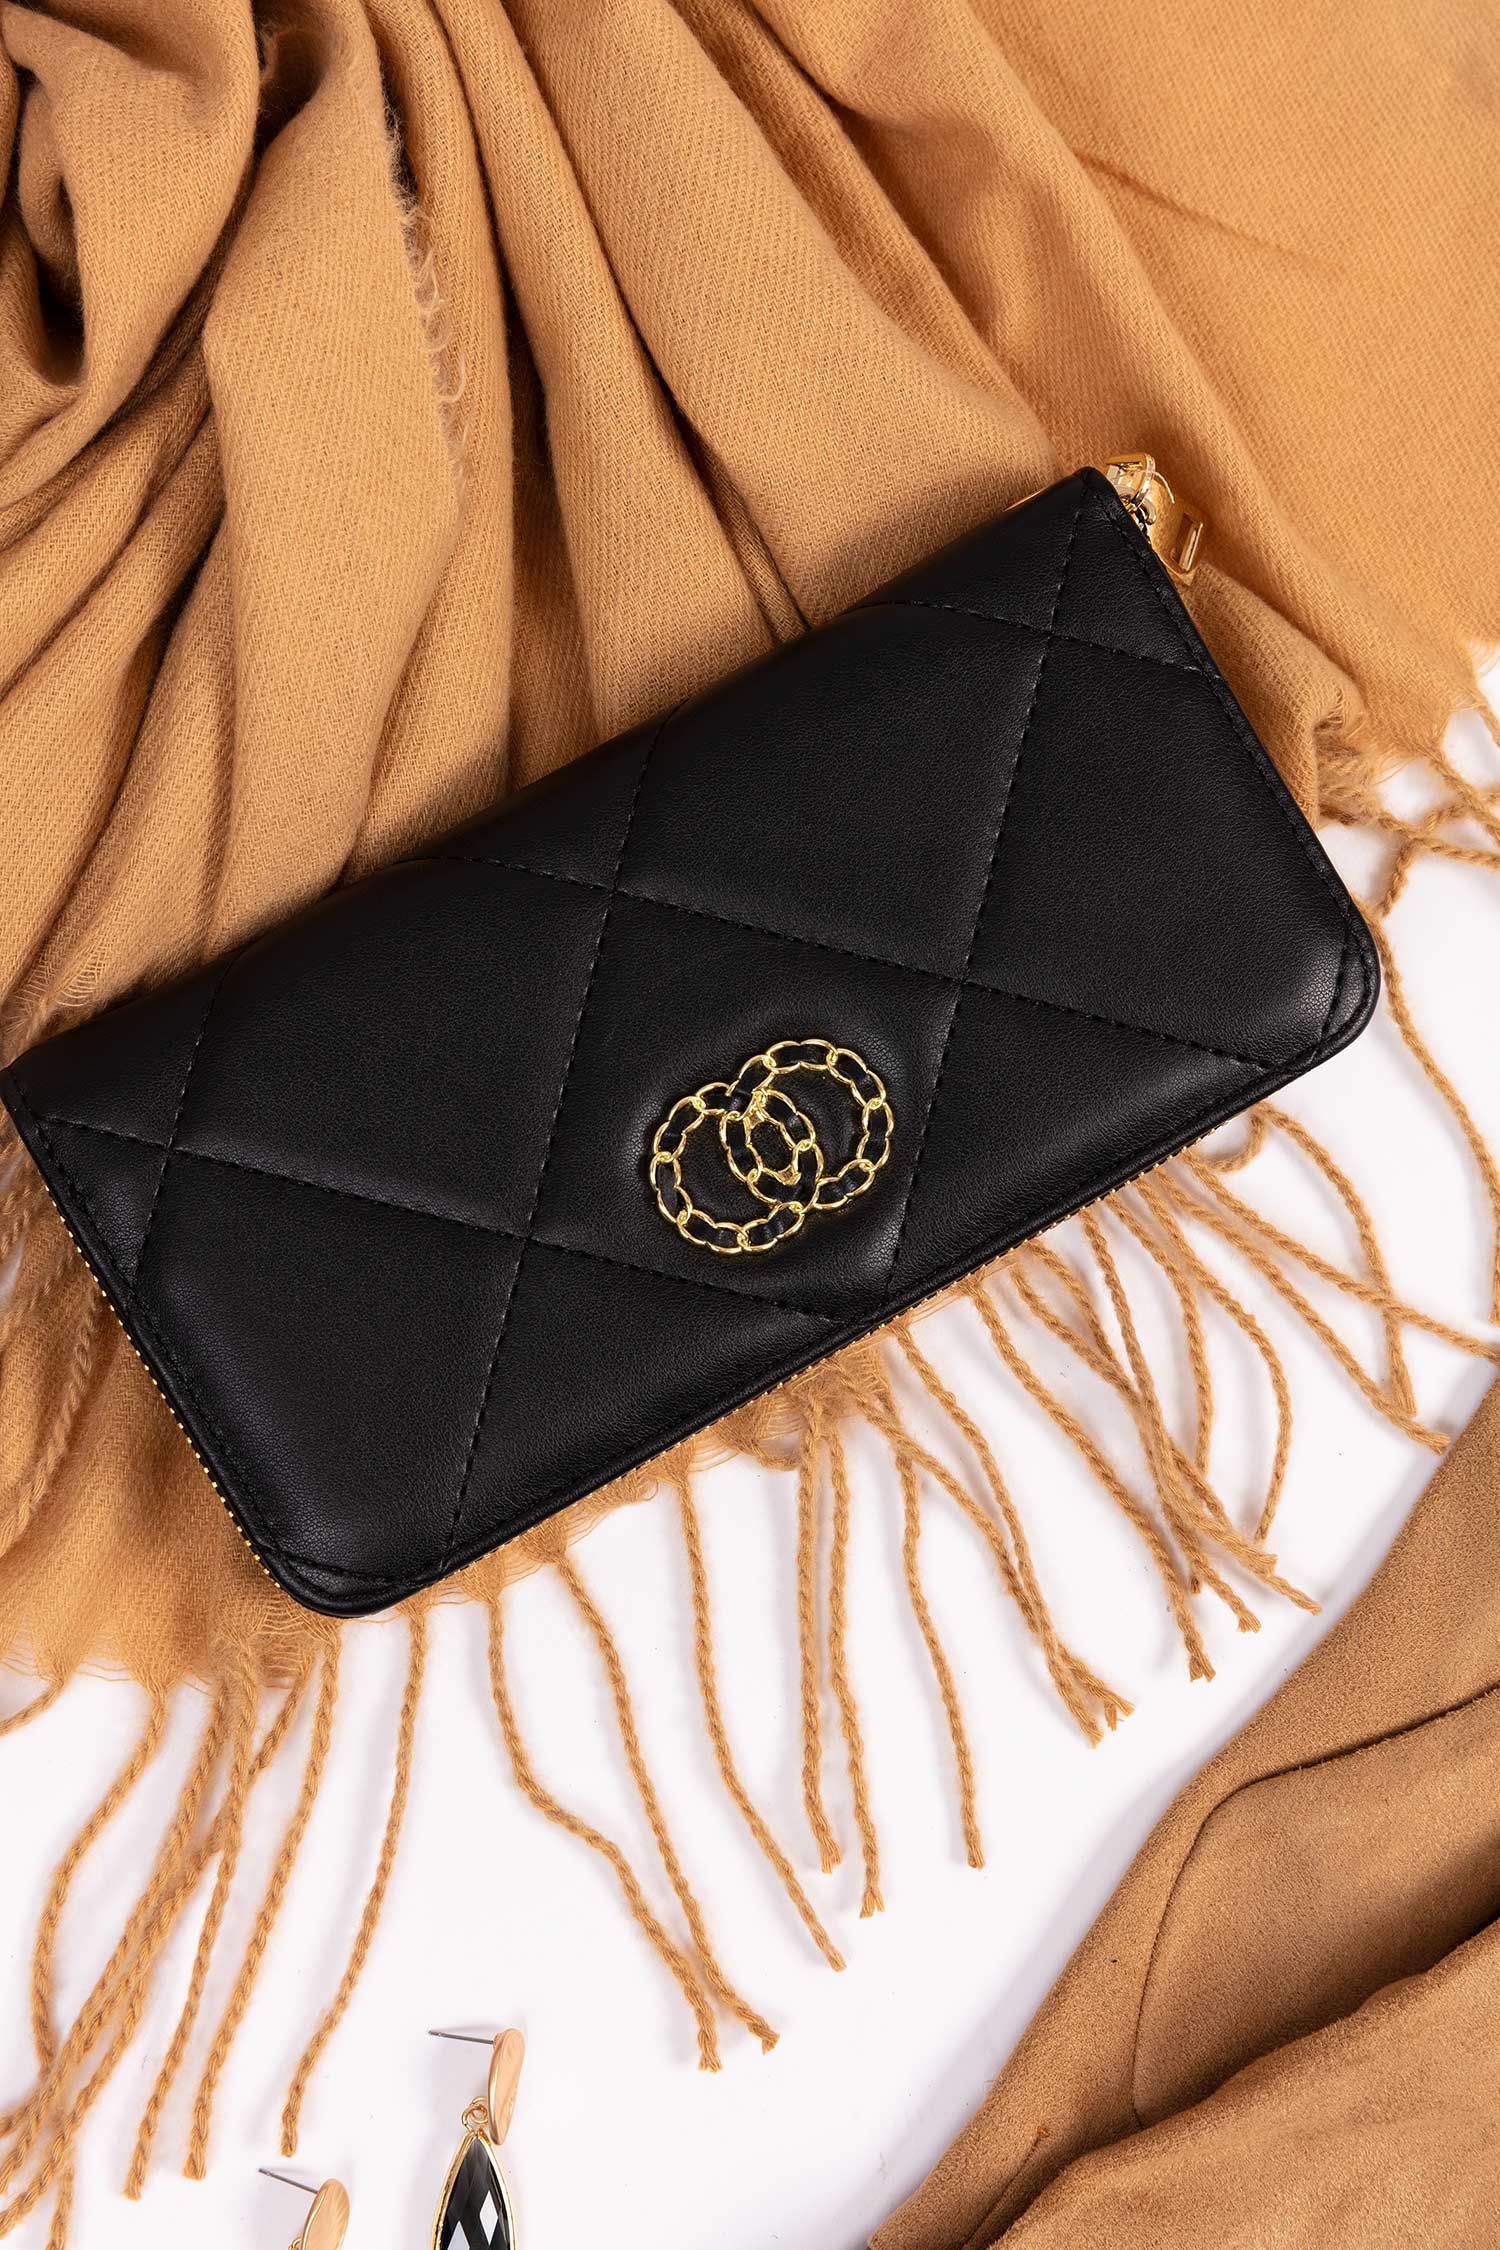 Classic black handbag with a gold chain. | Shoulder bag, Bags, Versace bags